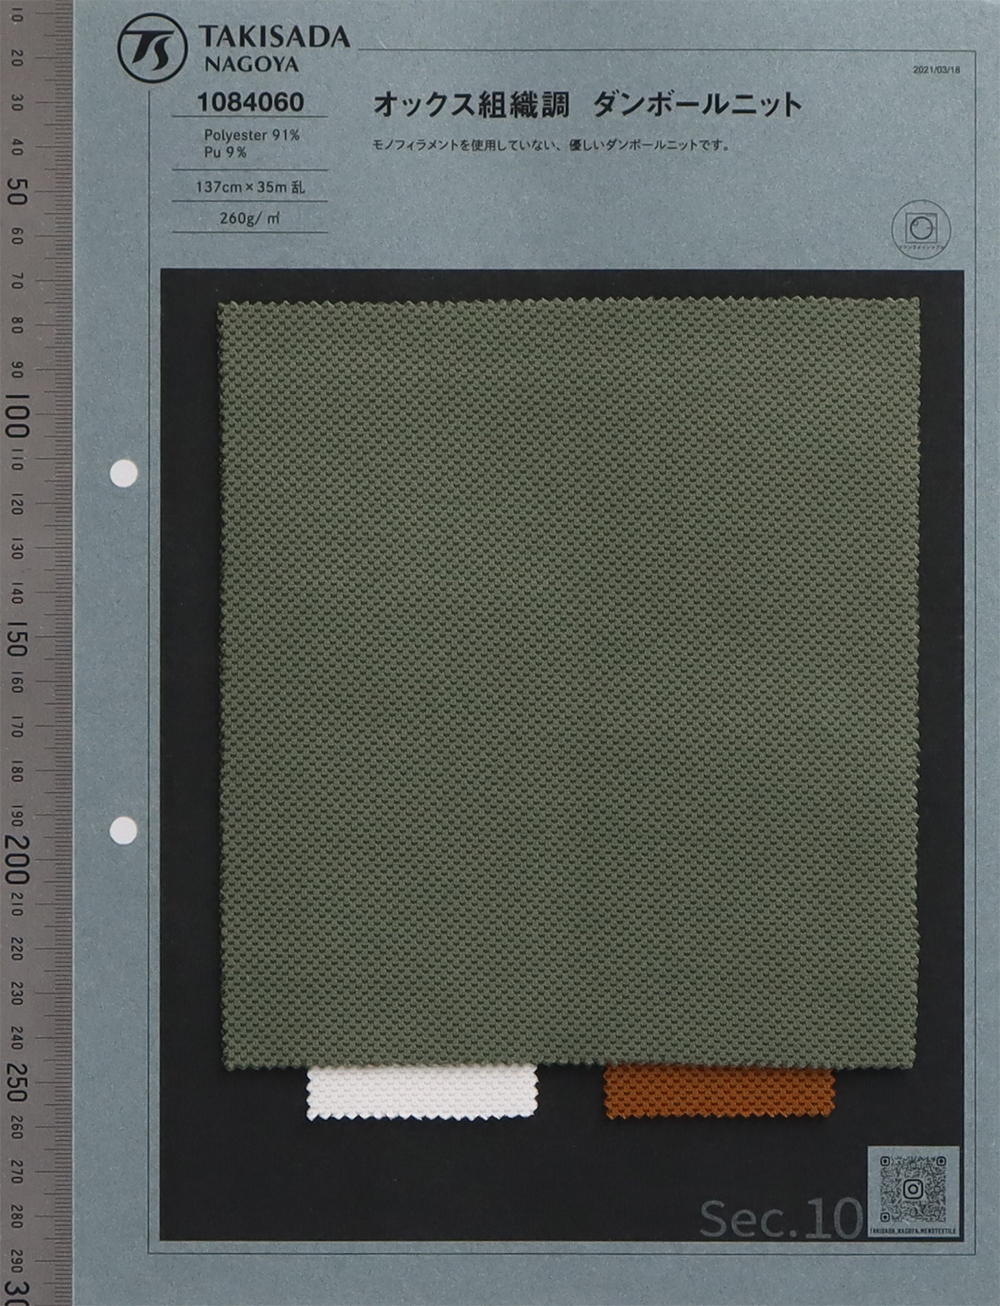 1084060 Oxford-Muster, Doppelt Gestrickt[Textilgewebe] Takisada Nagoya